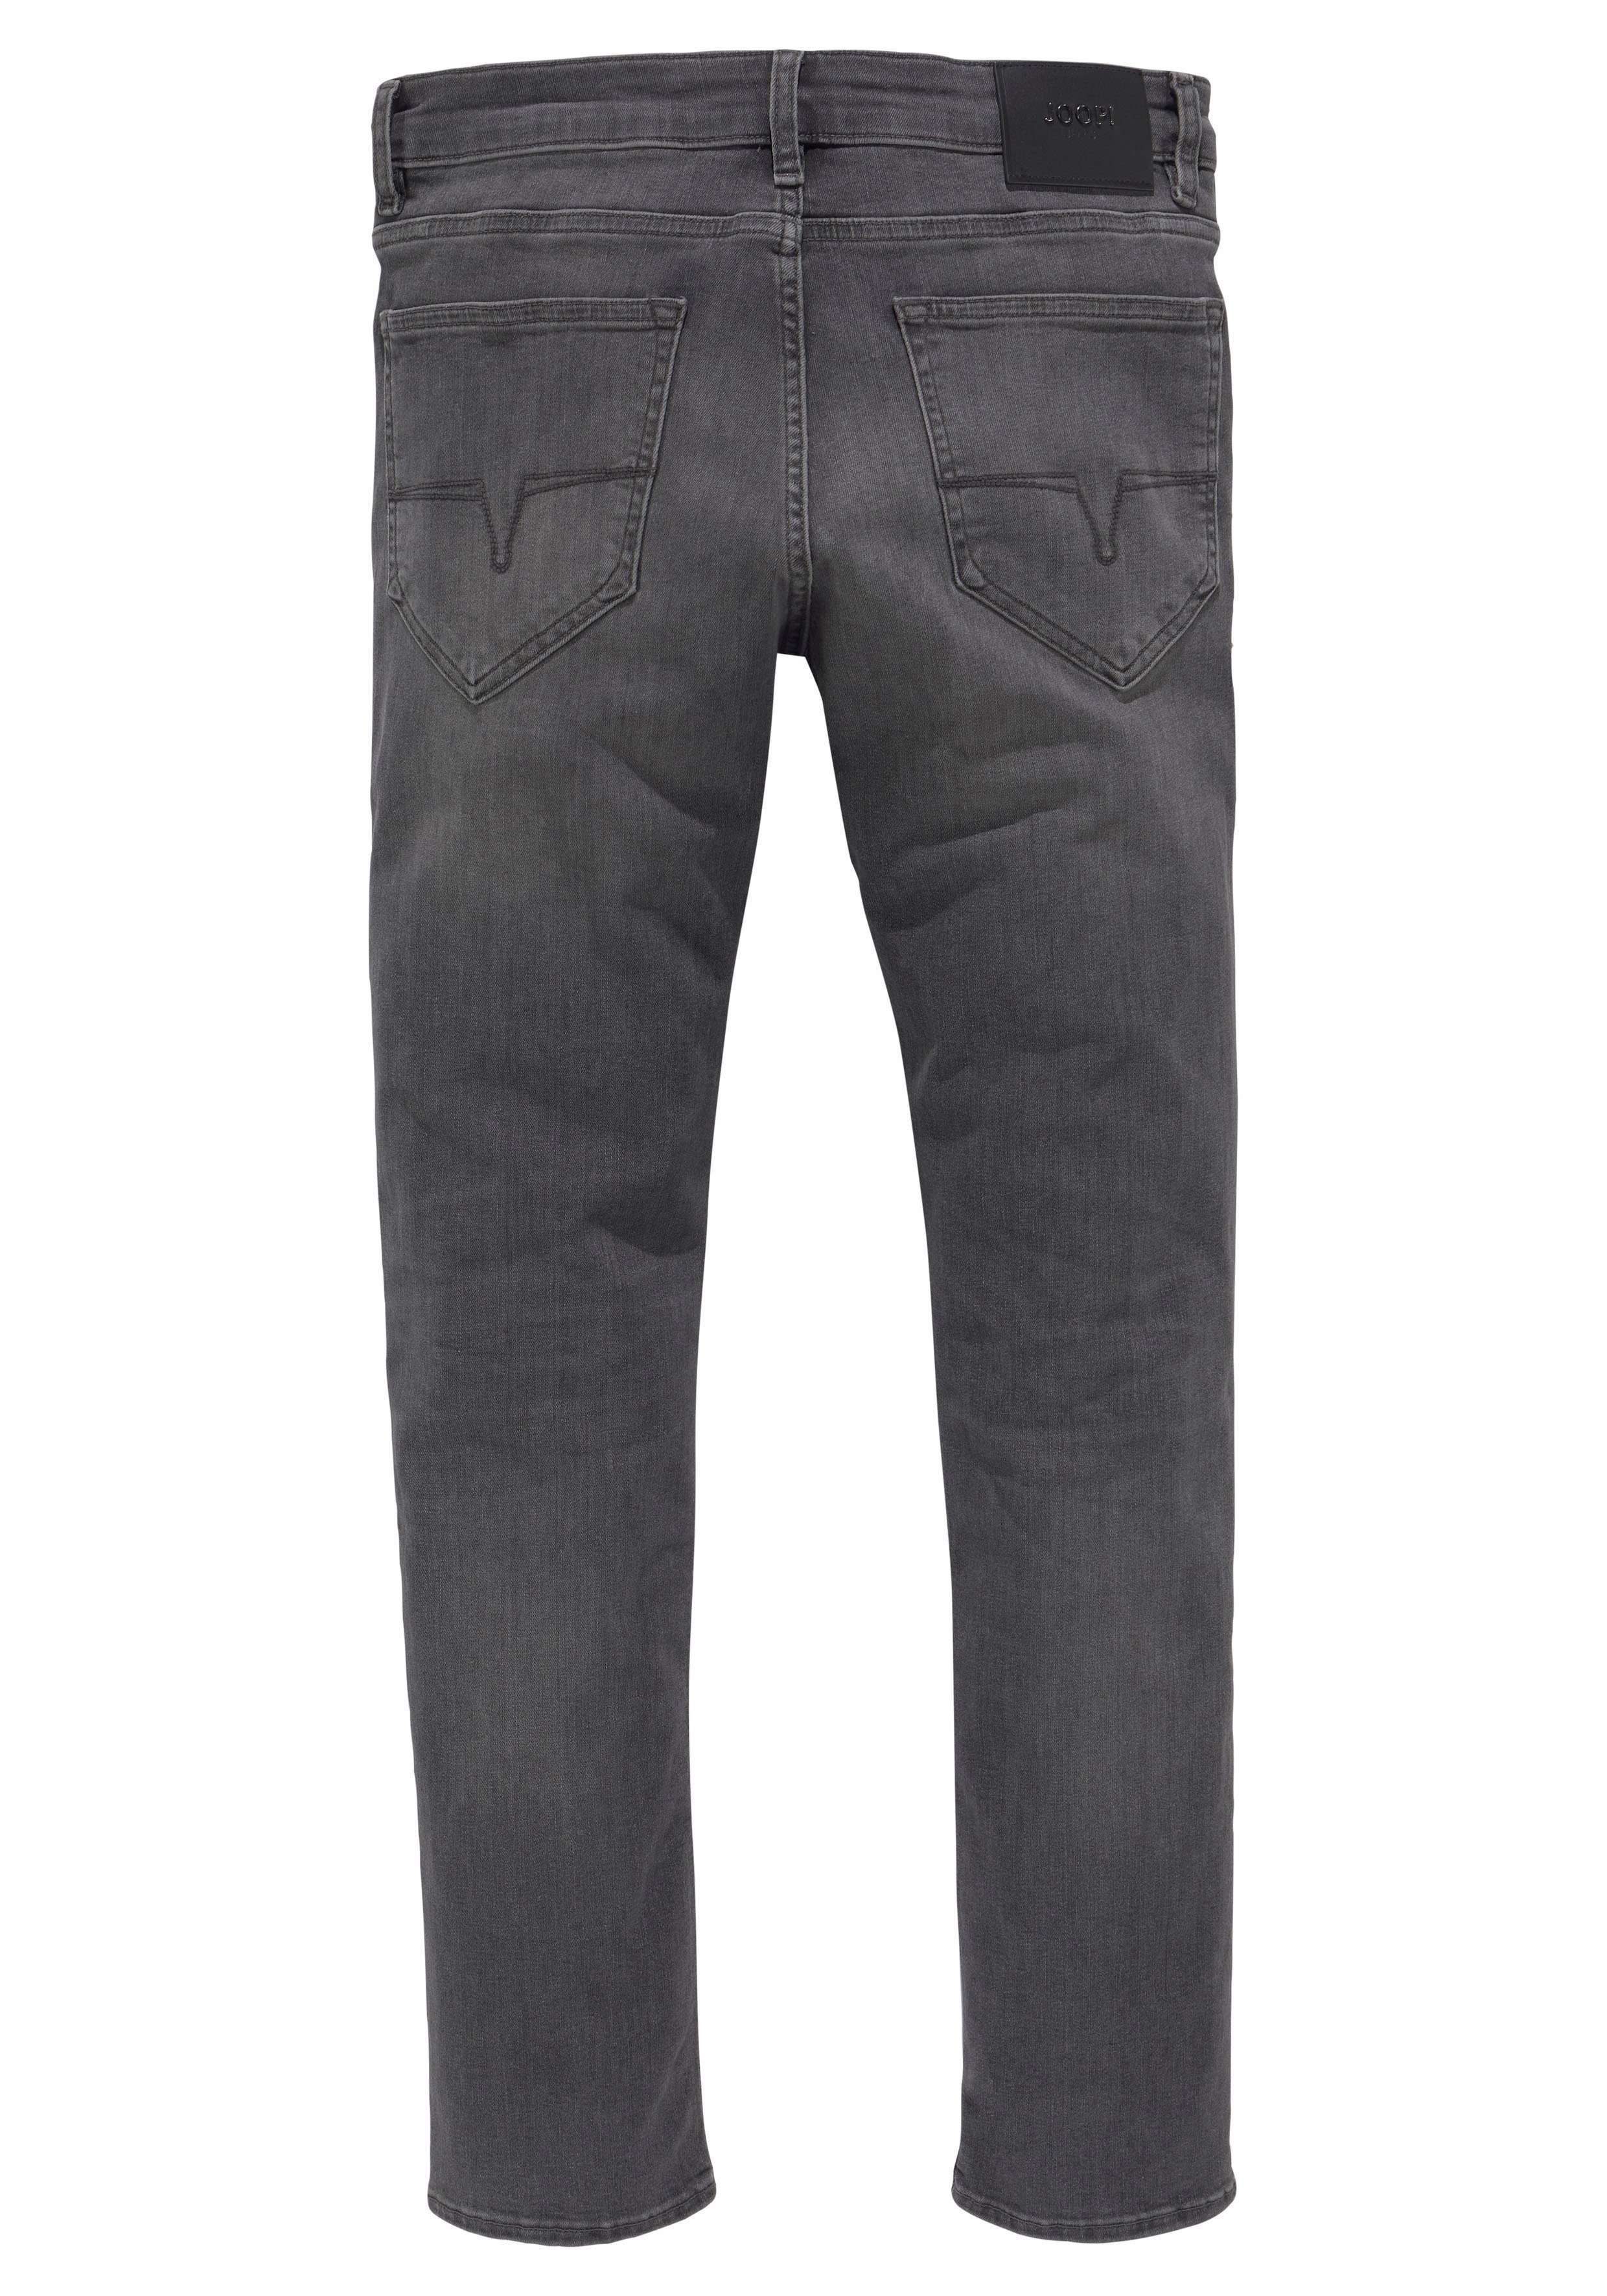 pastell Jeans Joop grey Stretch-Jeans Mitch